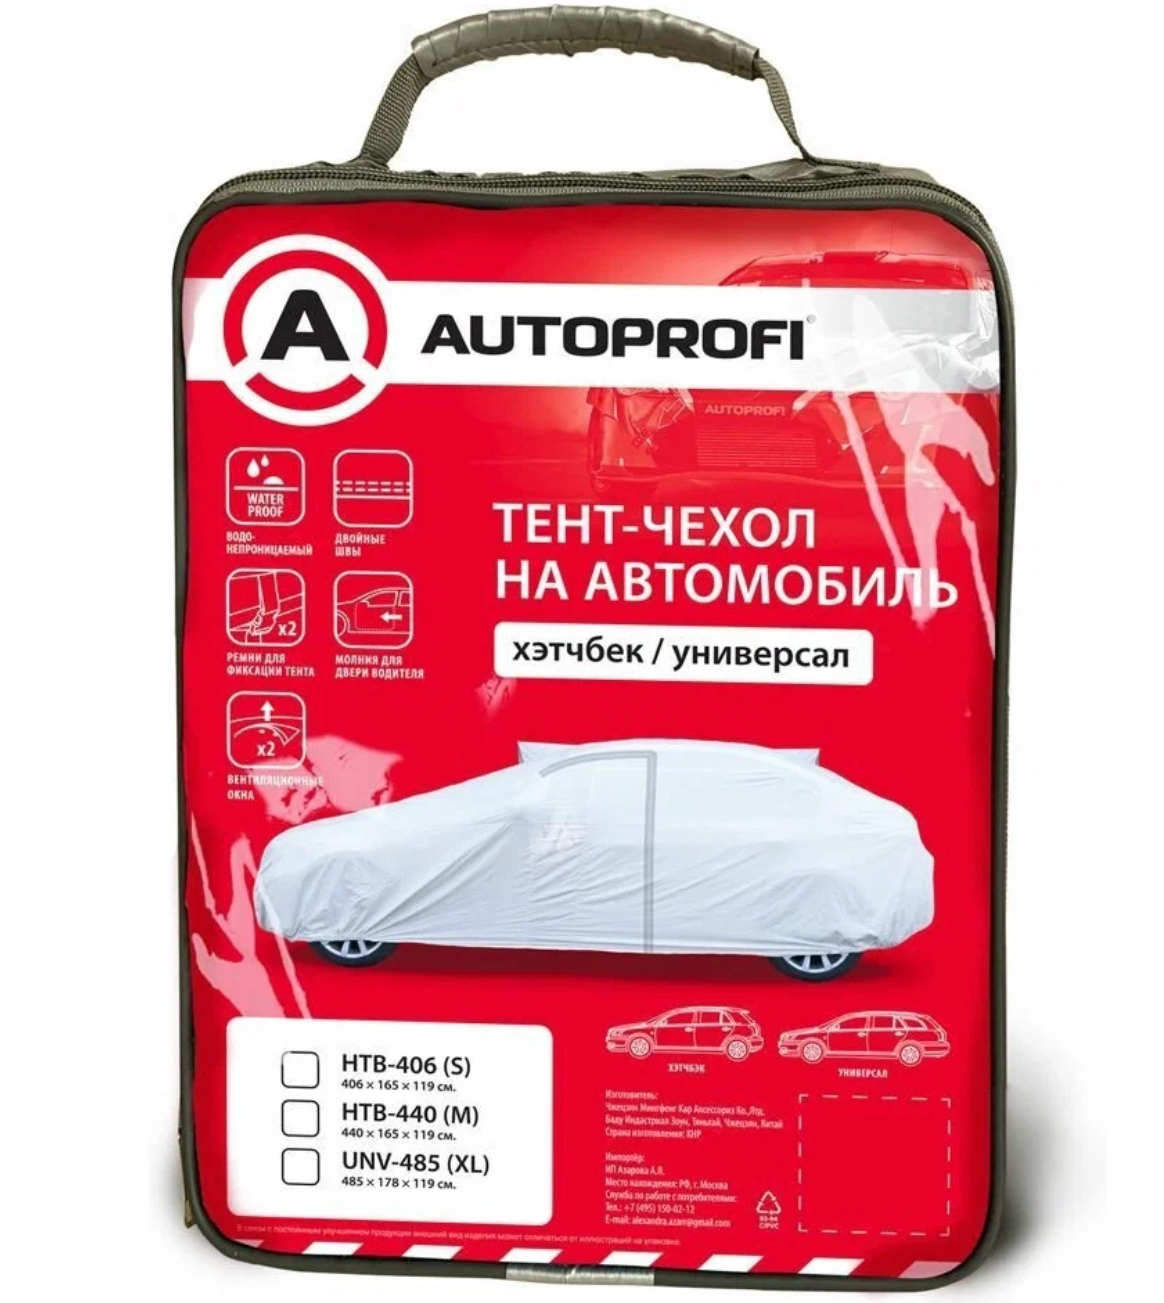 Автотент Autoprofi, хетчбек, водонепроницаемый, HTB-406, серебристый, размер S (406х165х119 см)